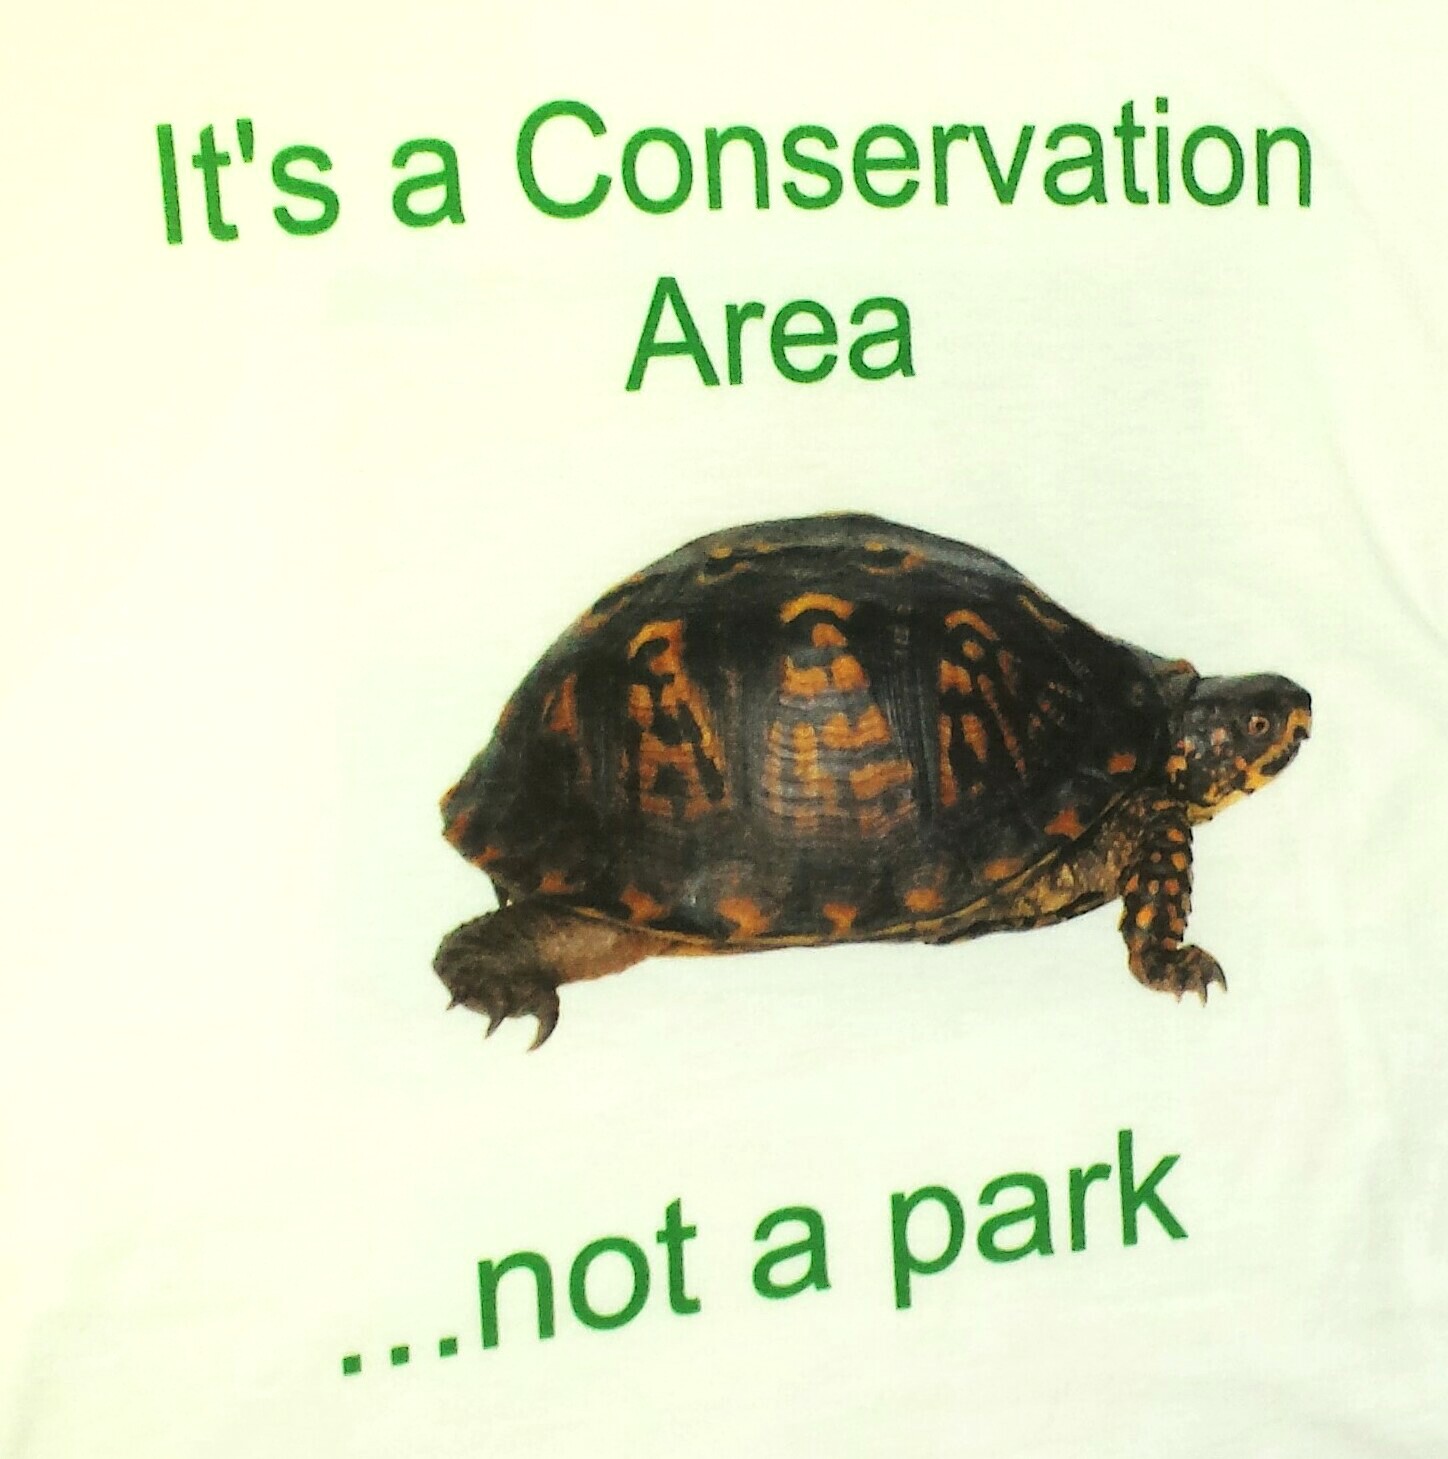 It's a conservation area... not a park